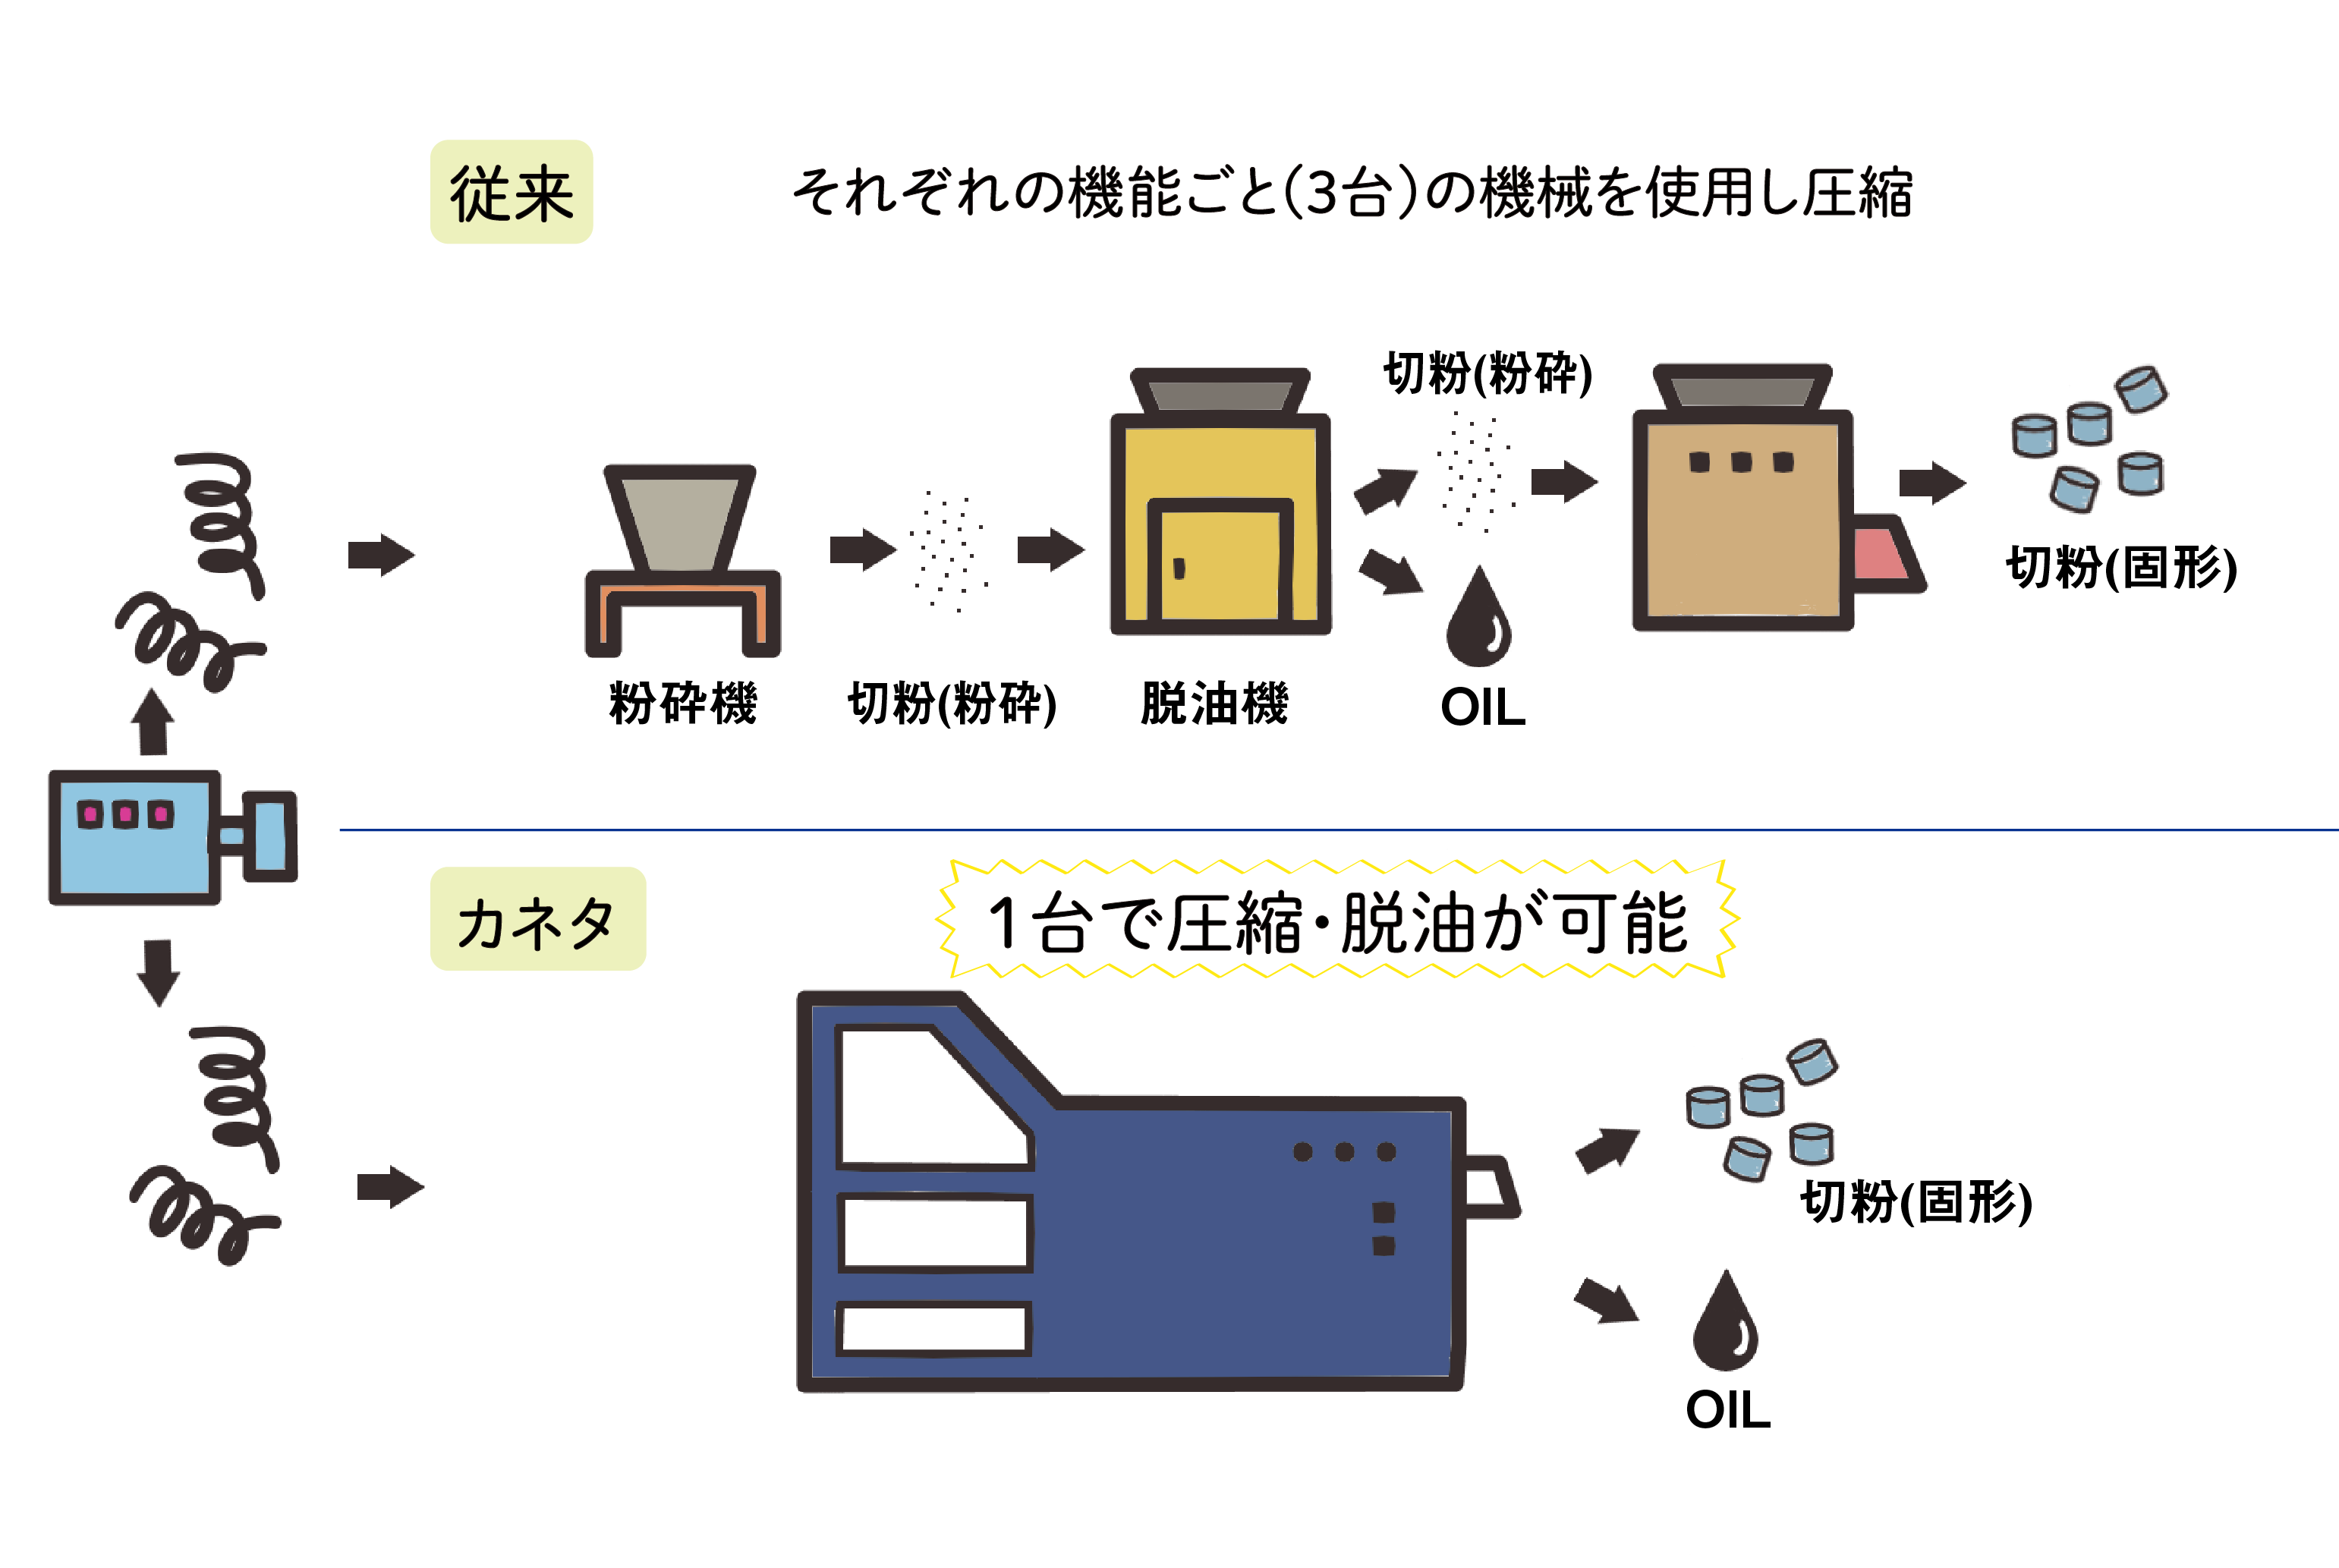 カネタ：切粉圧縮機説明図1台で圧縮脱油が可能説明図